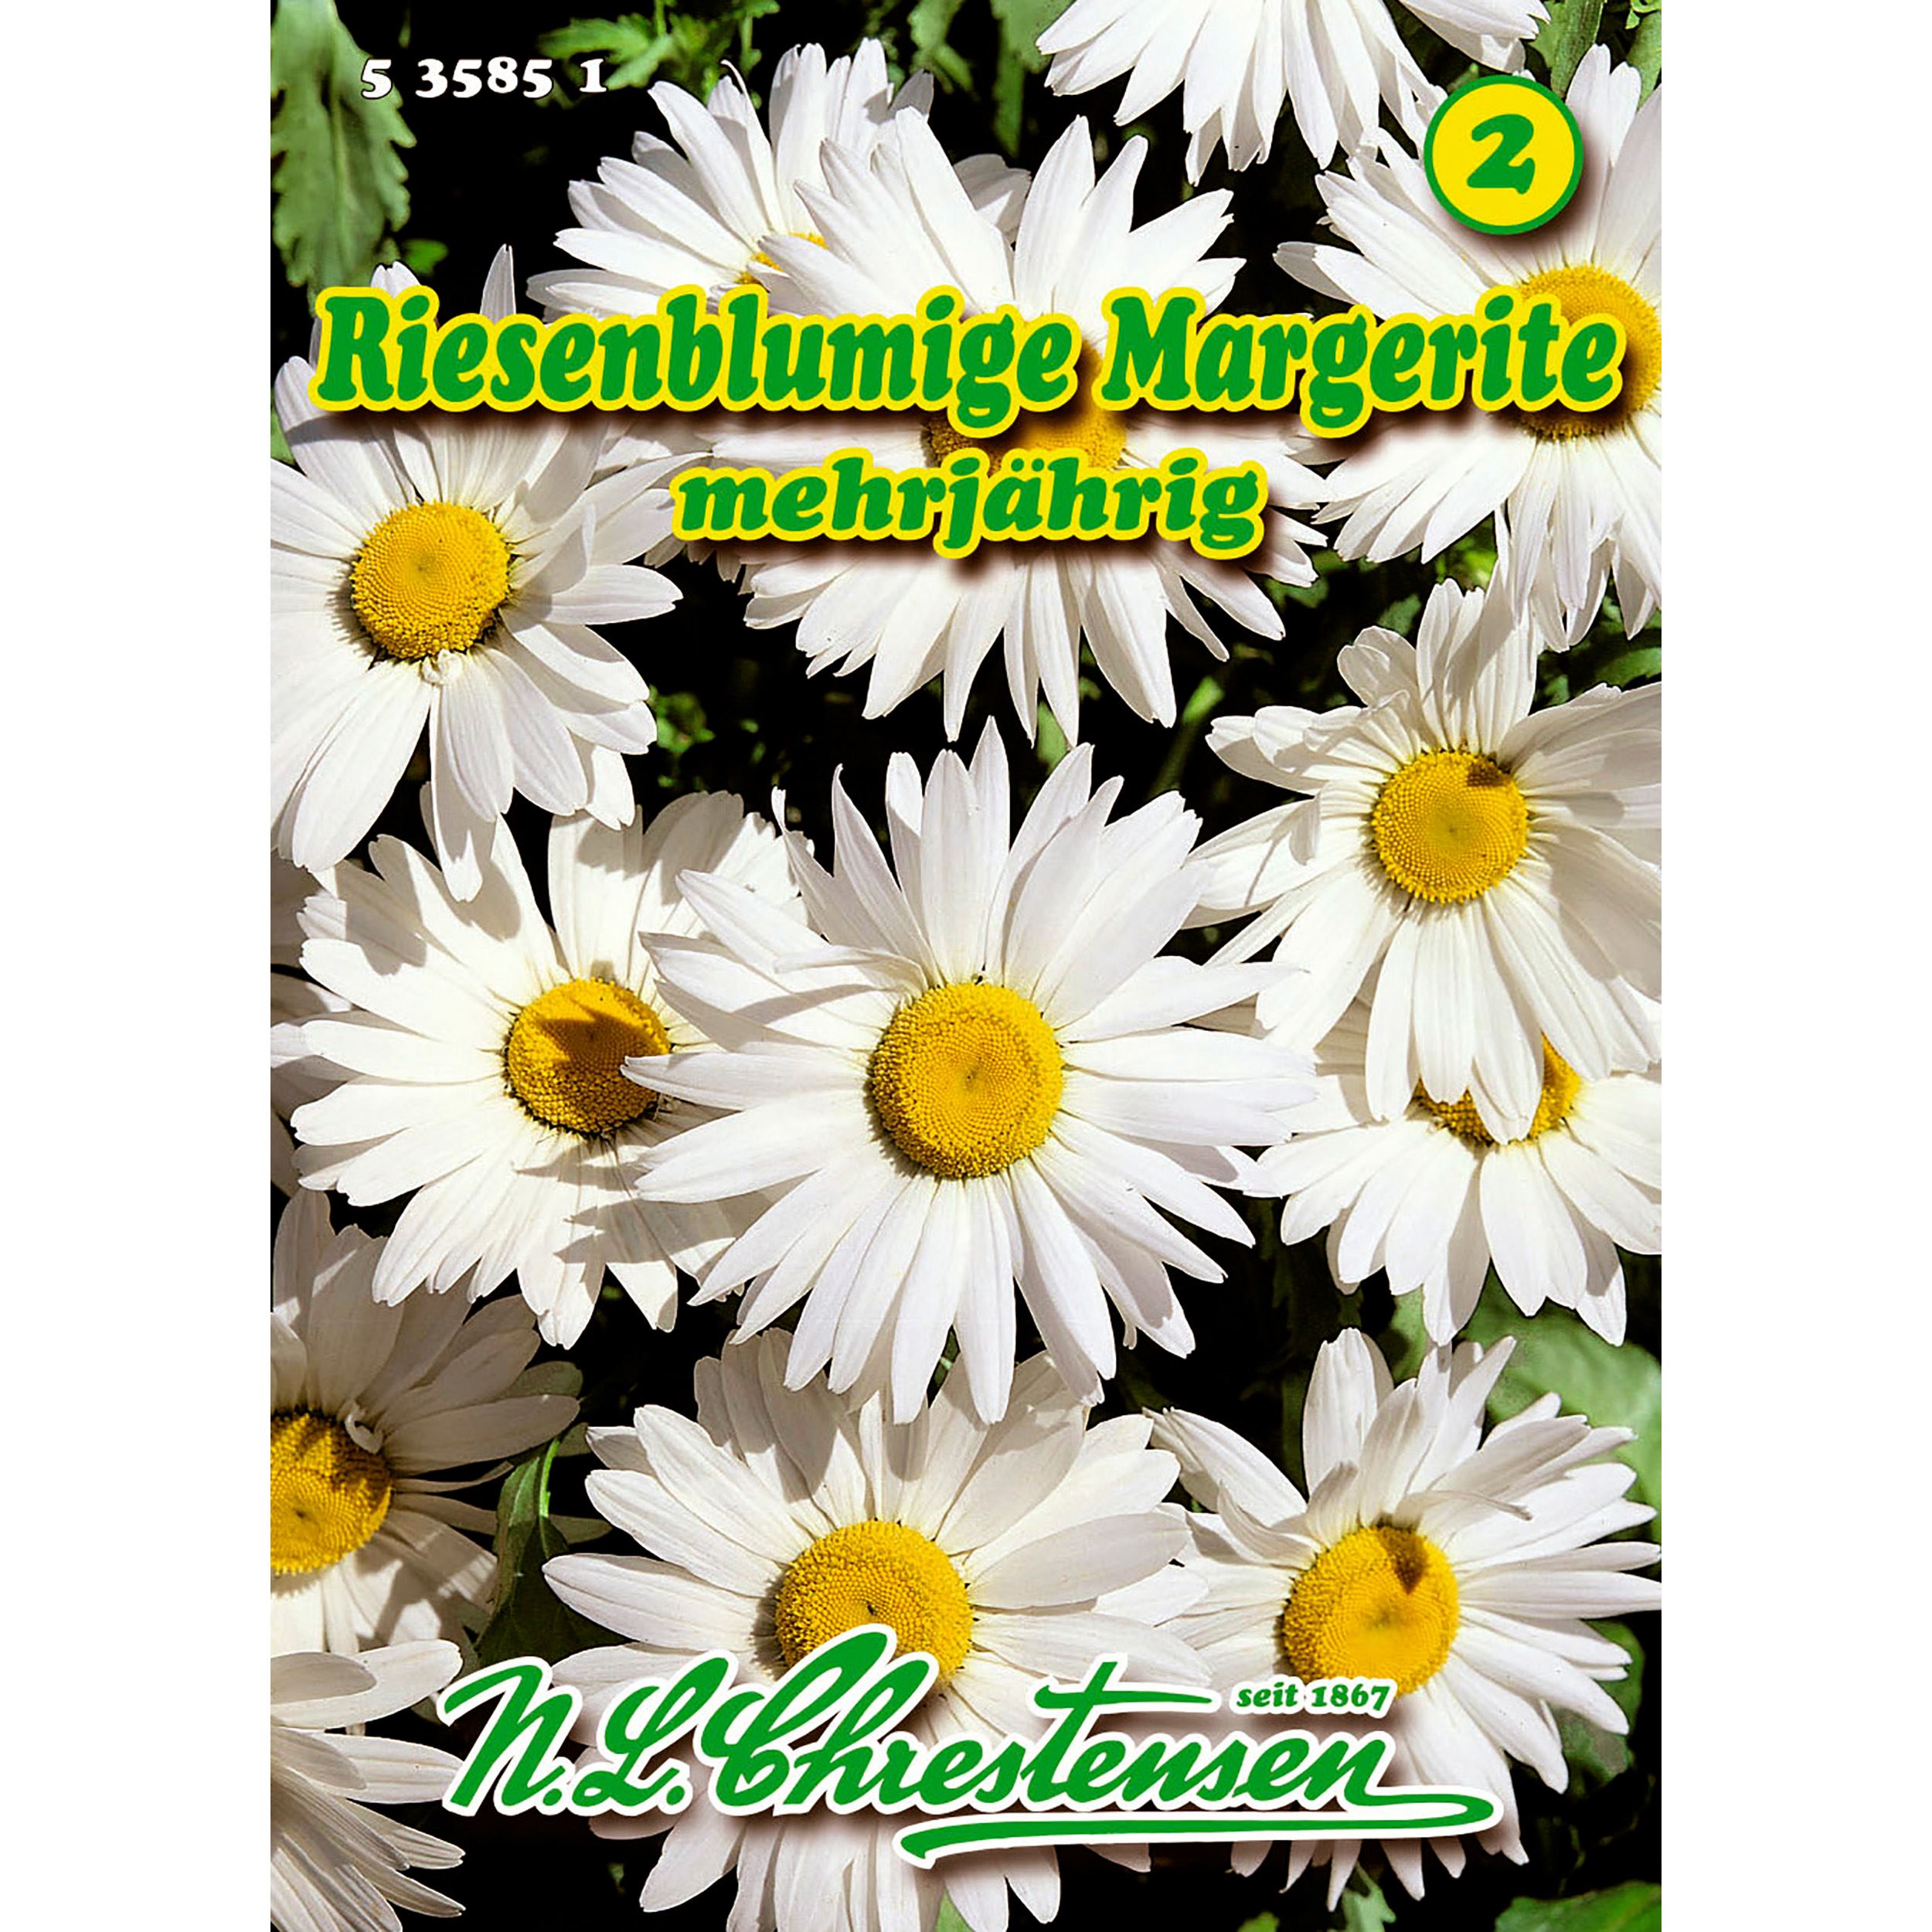 Chrysanthemum maximum, Riesenblumige Margerite